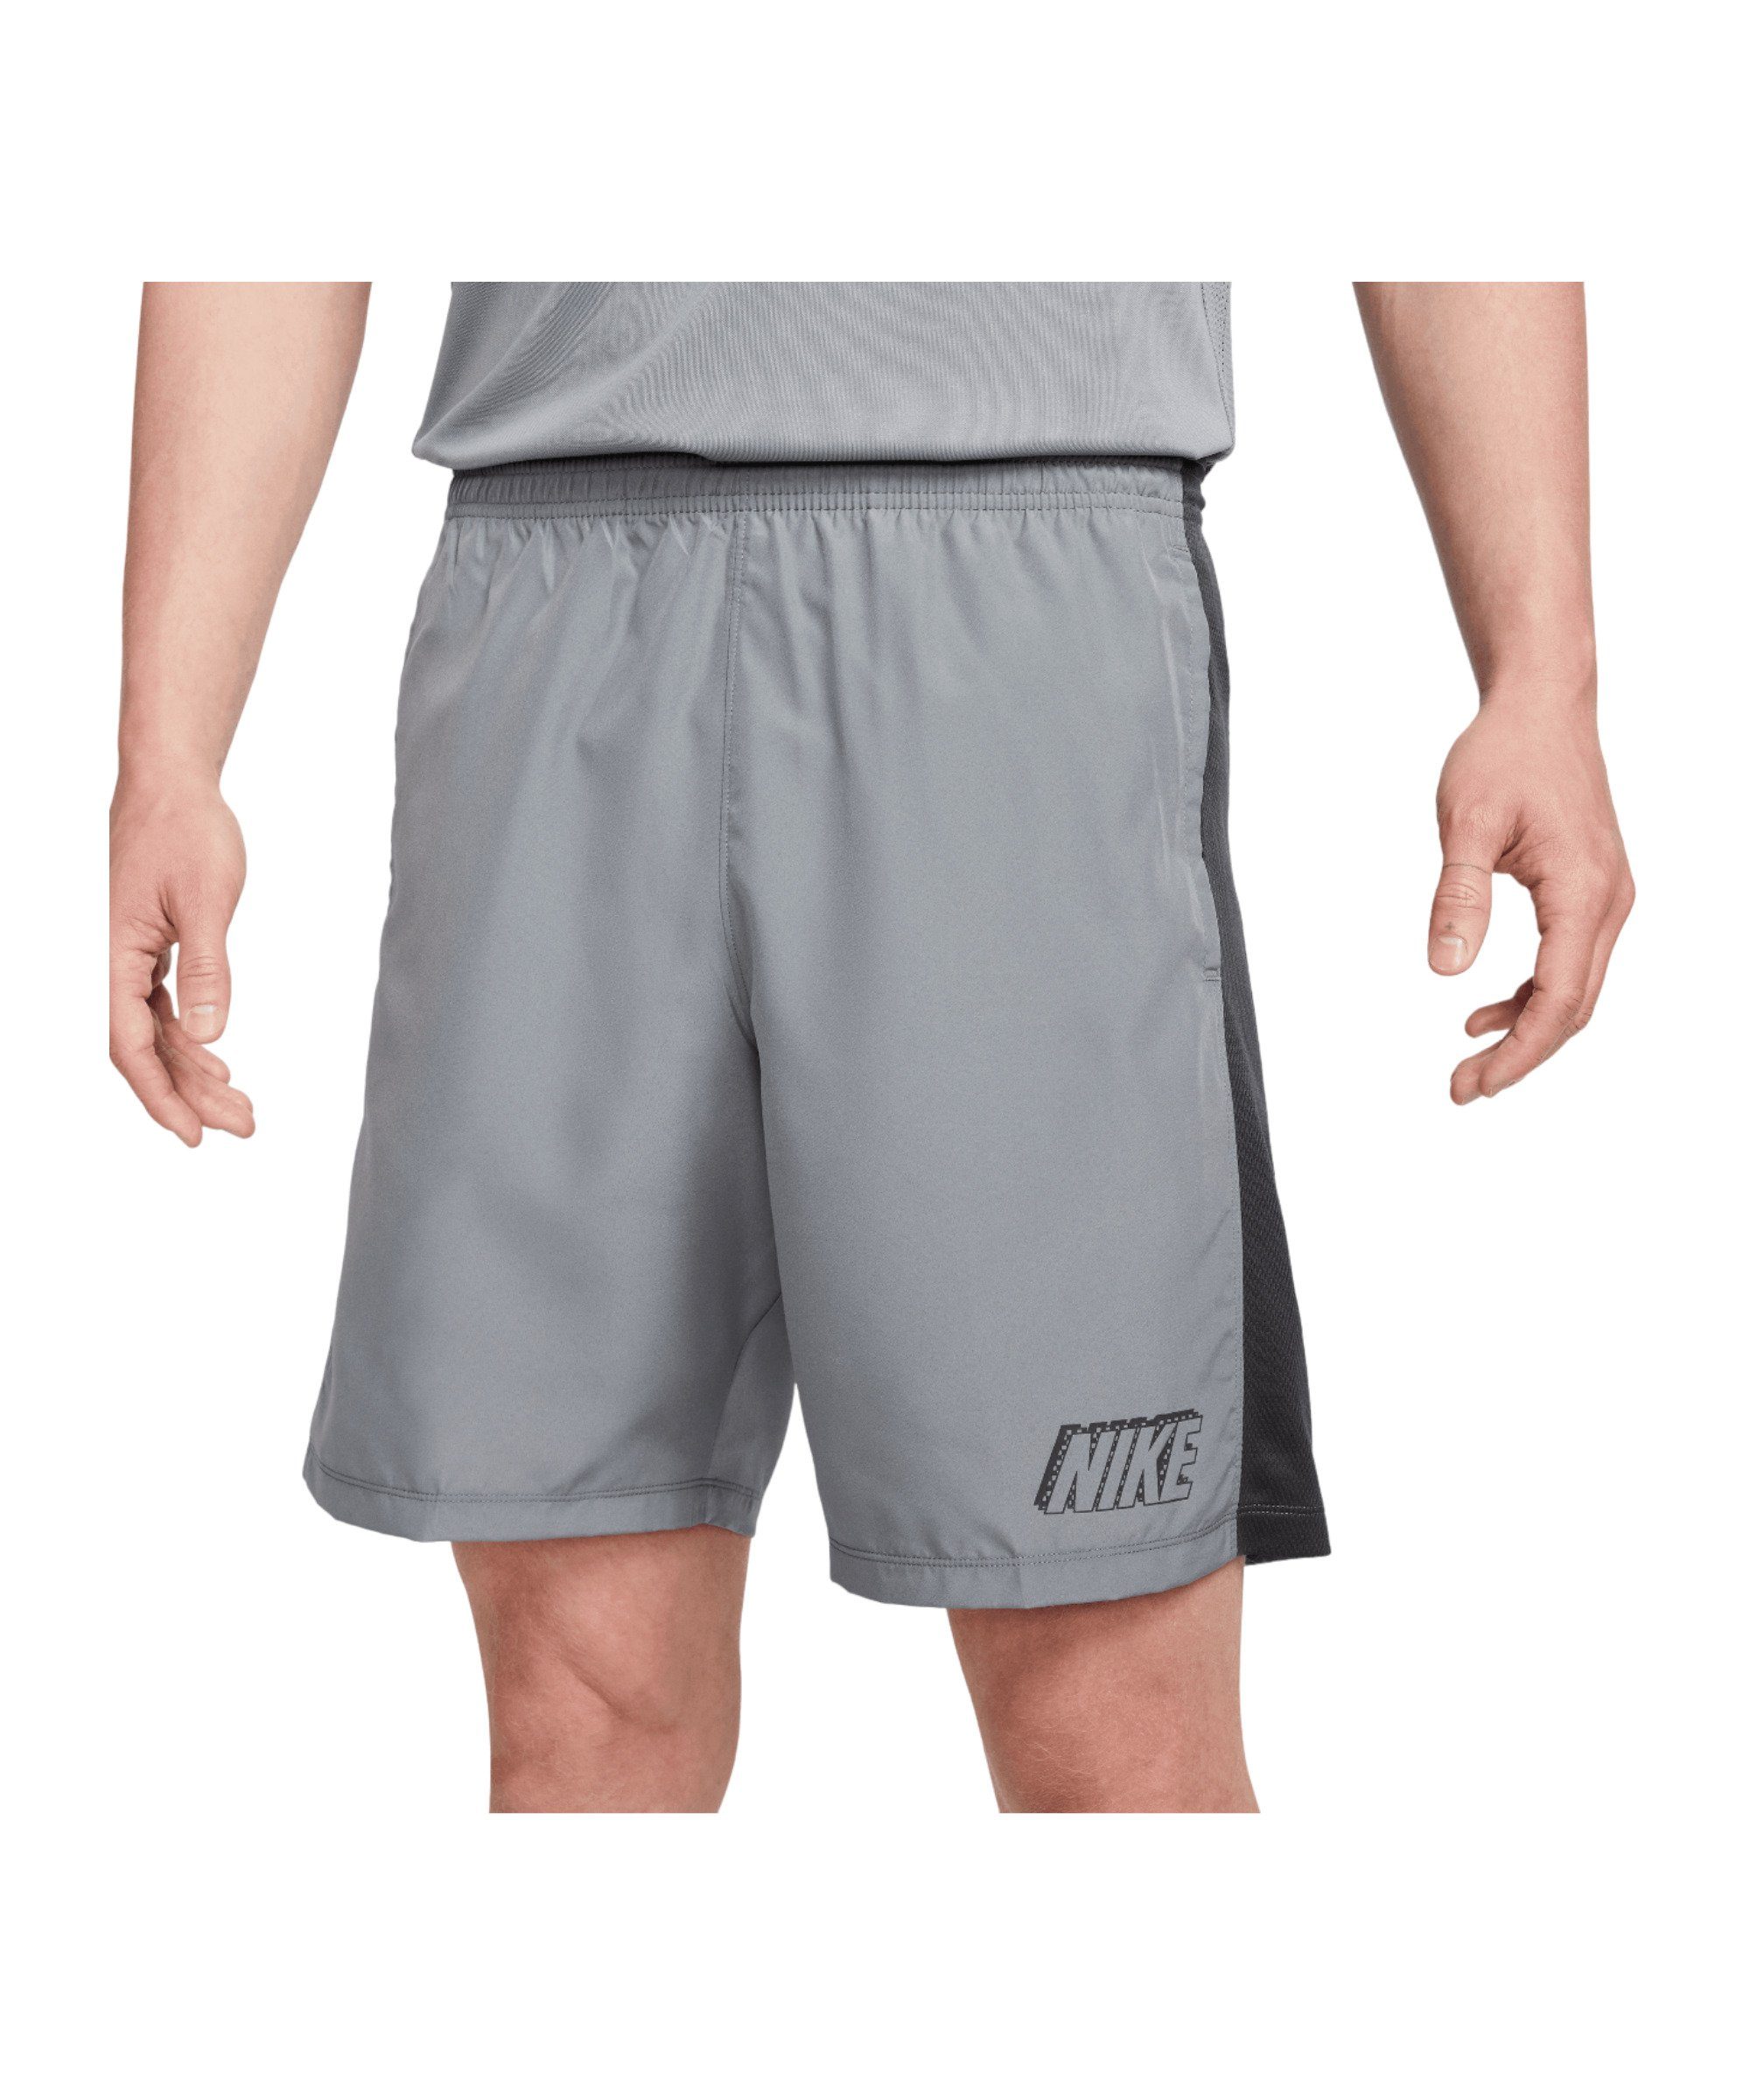 Nike Sporthose Academy Short graugraugrau